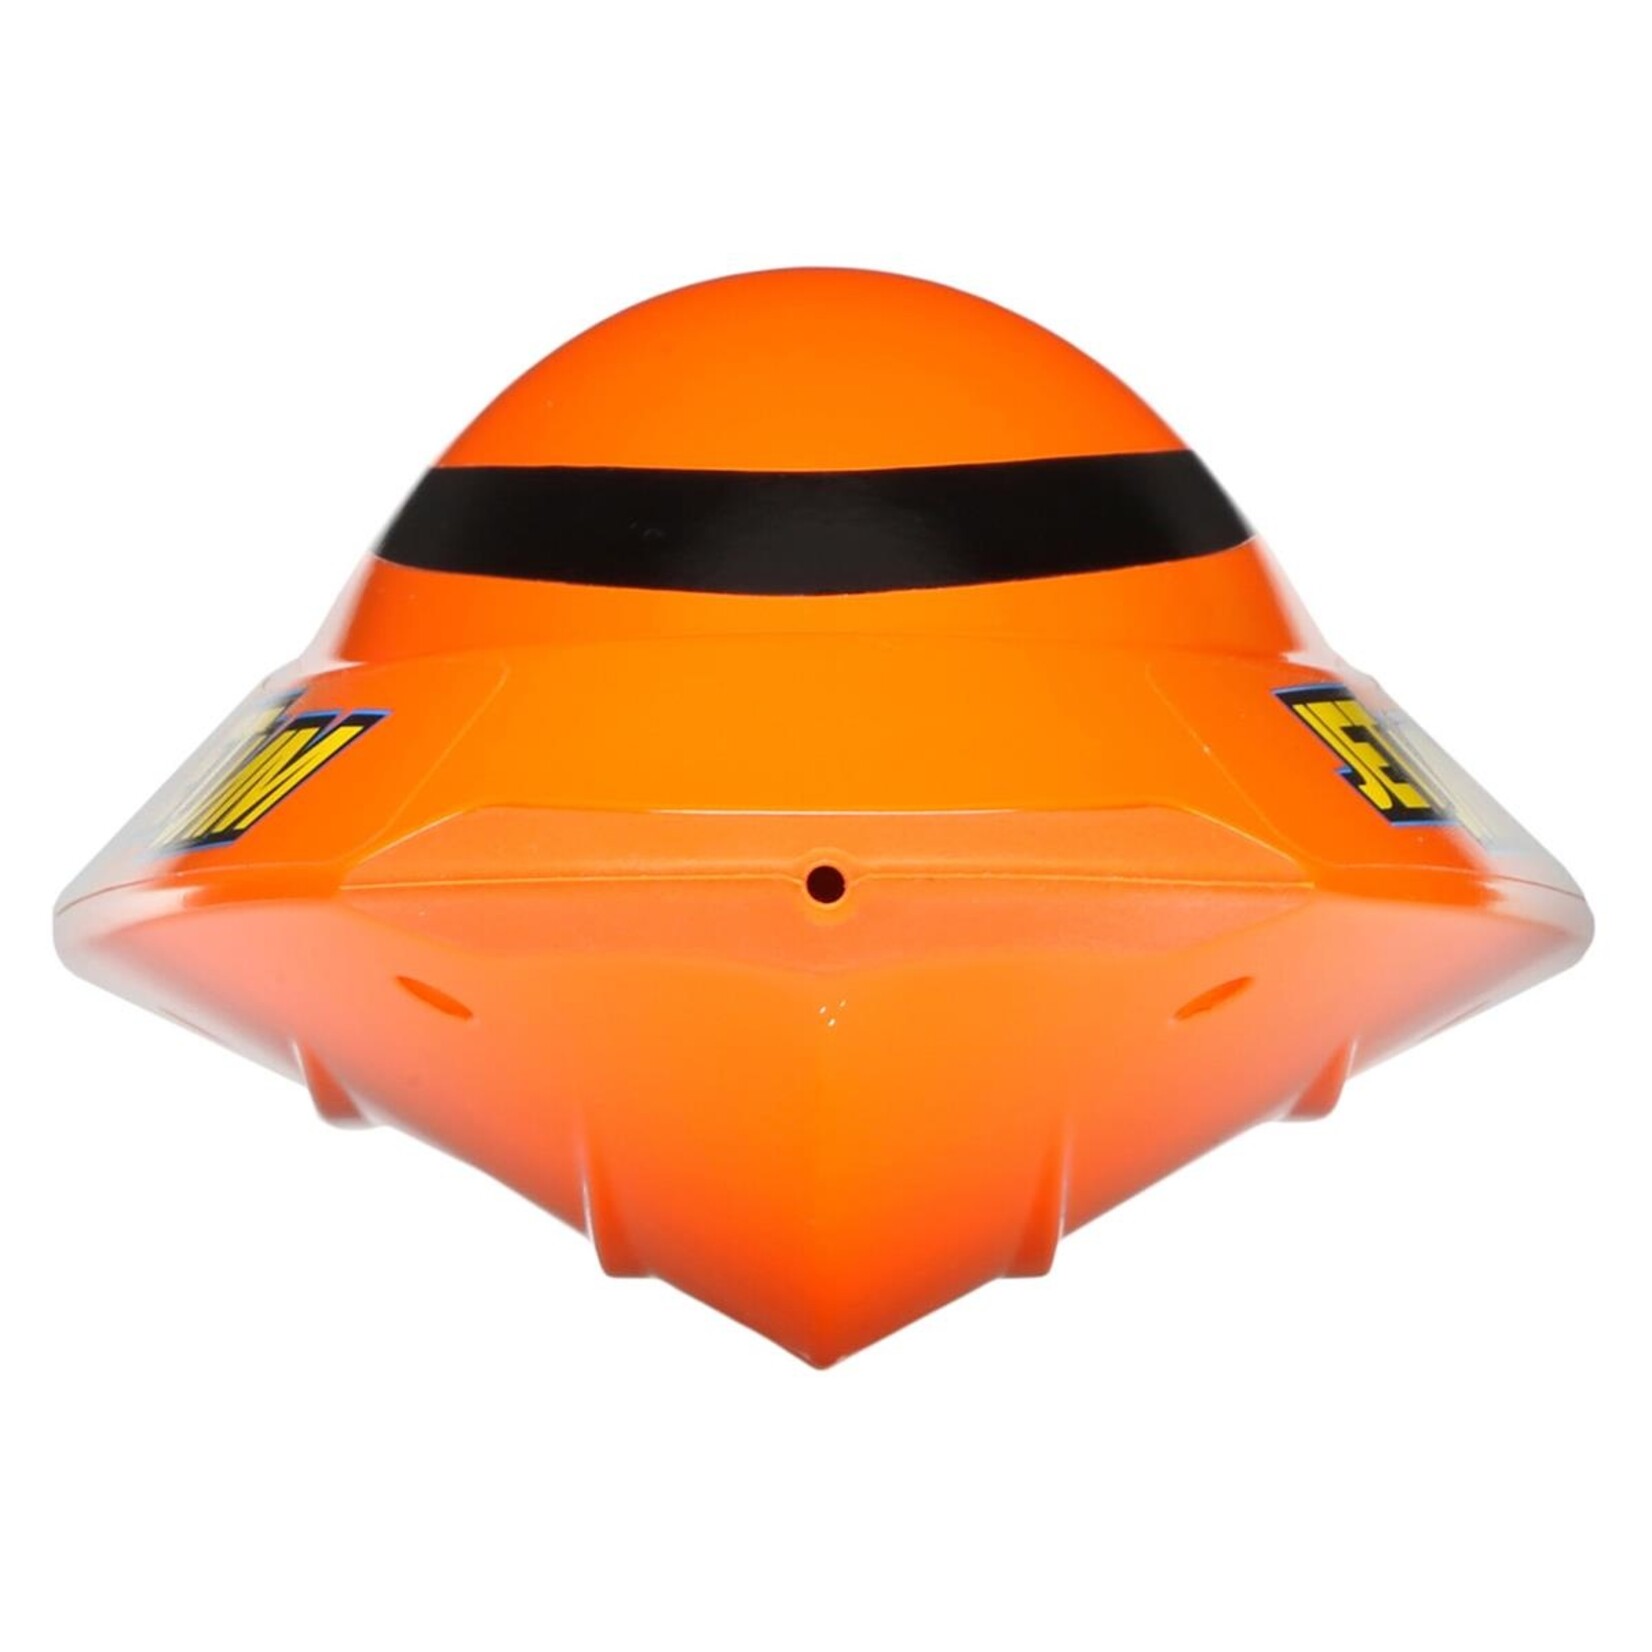 Pro Boat Pro Boat Jet Jam V2 12" Self-Righting Brushed RTR Pool Race Boat (Orange) w/2.4GHz Radio, Battery & Charger #PRB08031V2T1